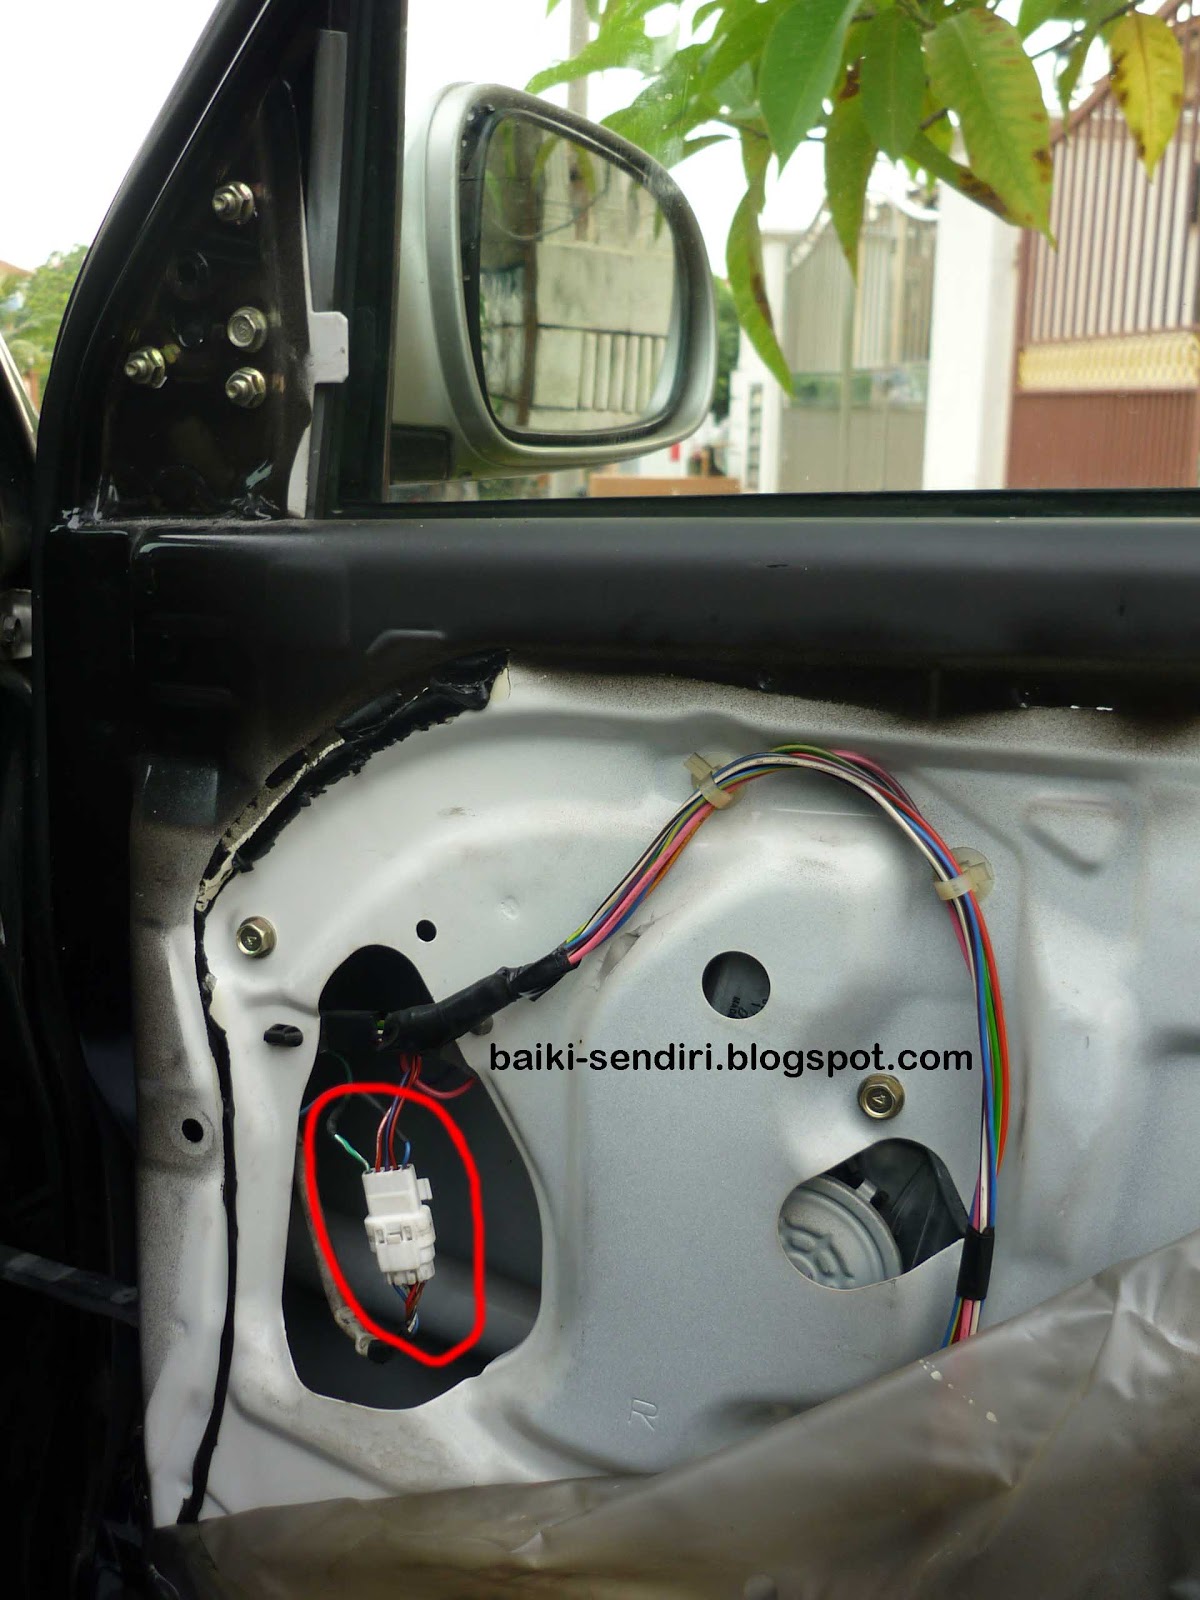 DIY: Fix On Your Own: Daihatsu L7 / Perodua Kelisa 